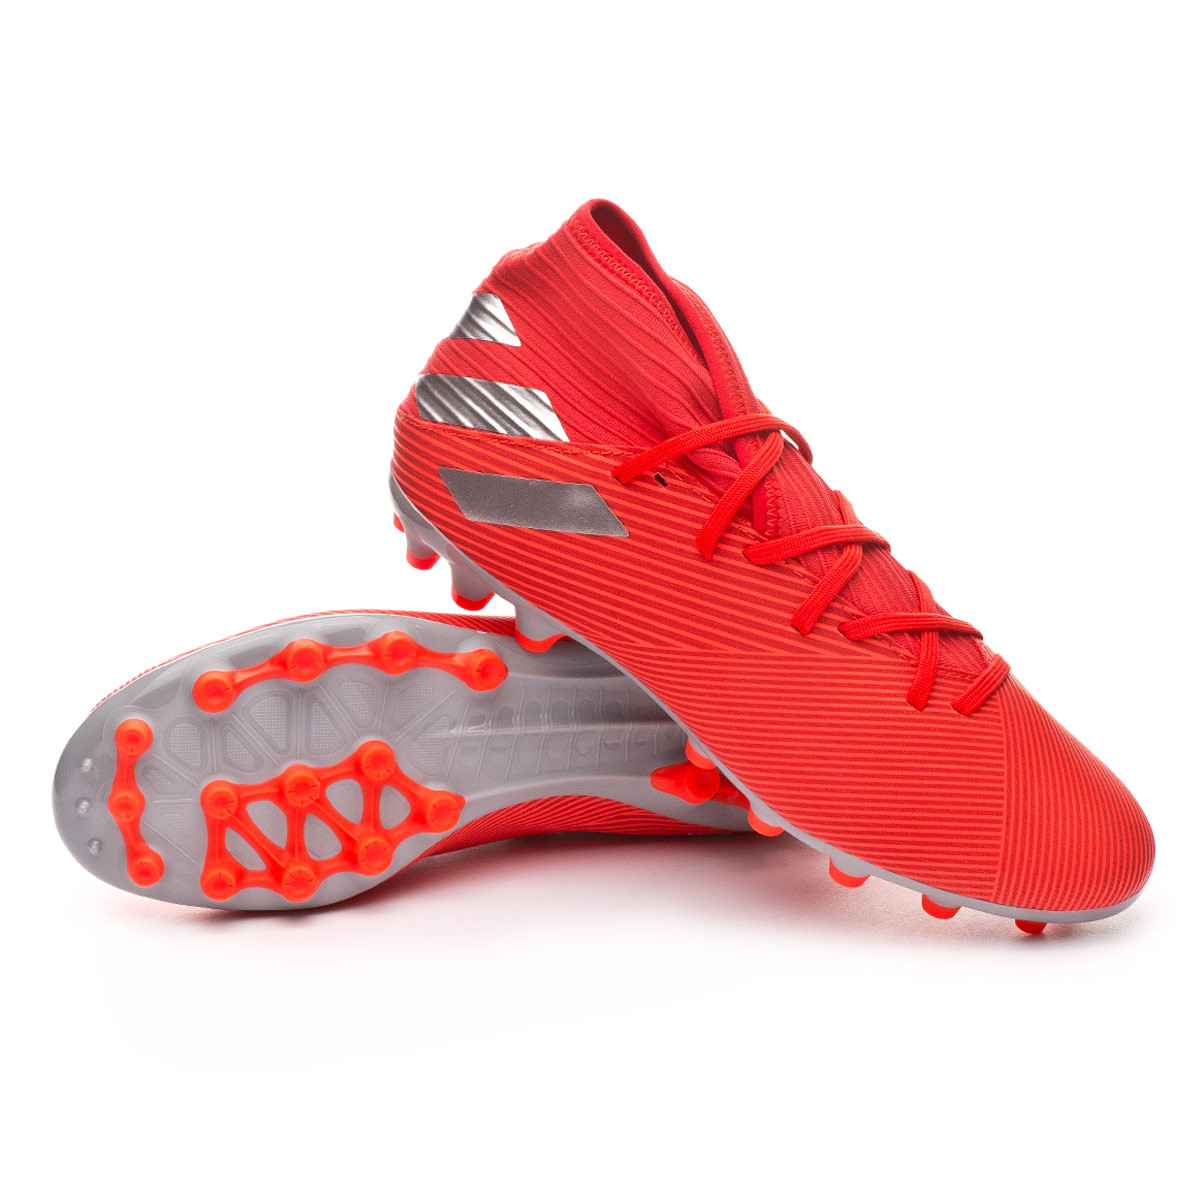 Football Boots adidas Nemeziz 19.3 AG Active red-Silver metallic-Solar red  - Football store Fútbol Emotion